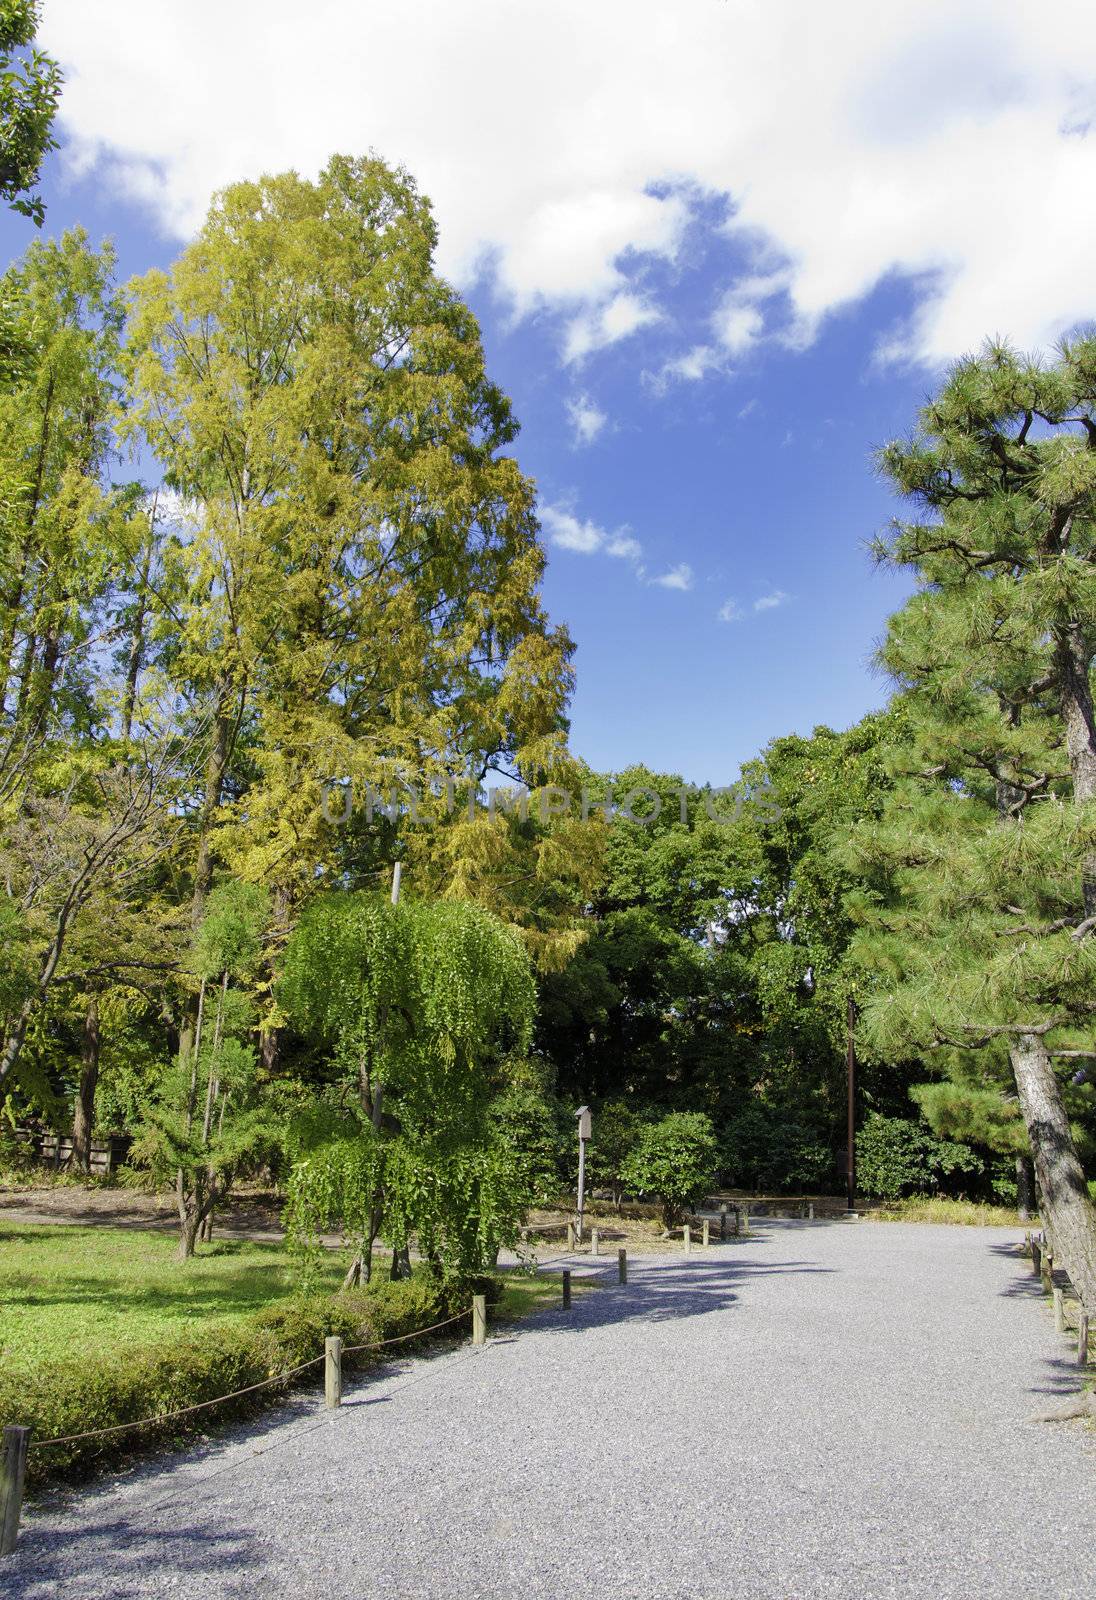 Pathway in the garden of nijo castle, Kyoto, Japan